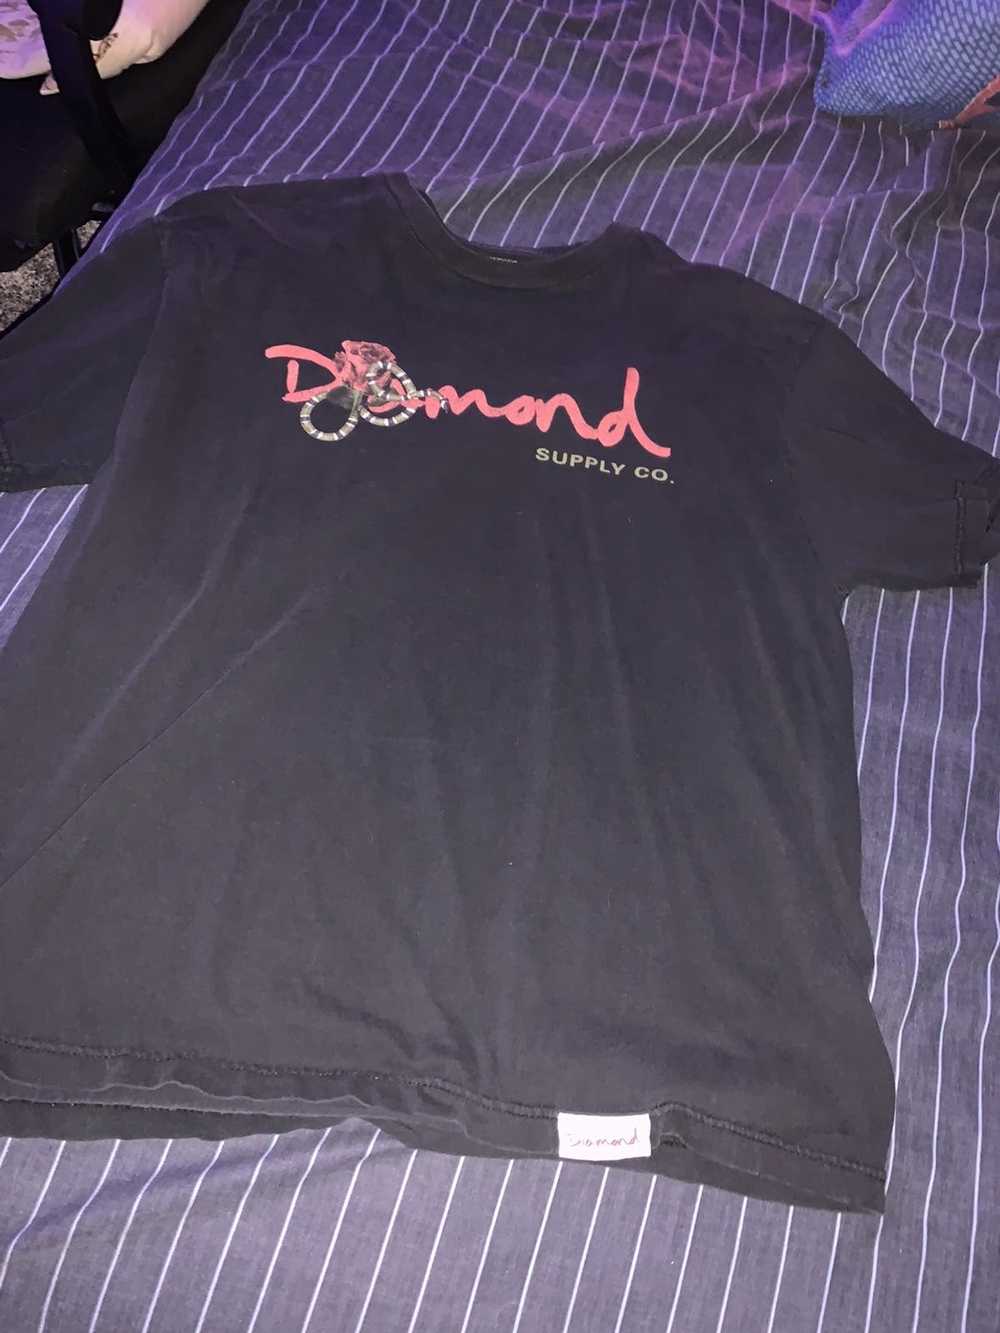 Diamond Supply Co Snake and Rose T-Shirt - image 1